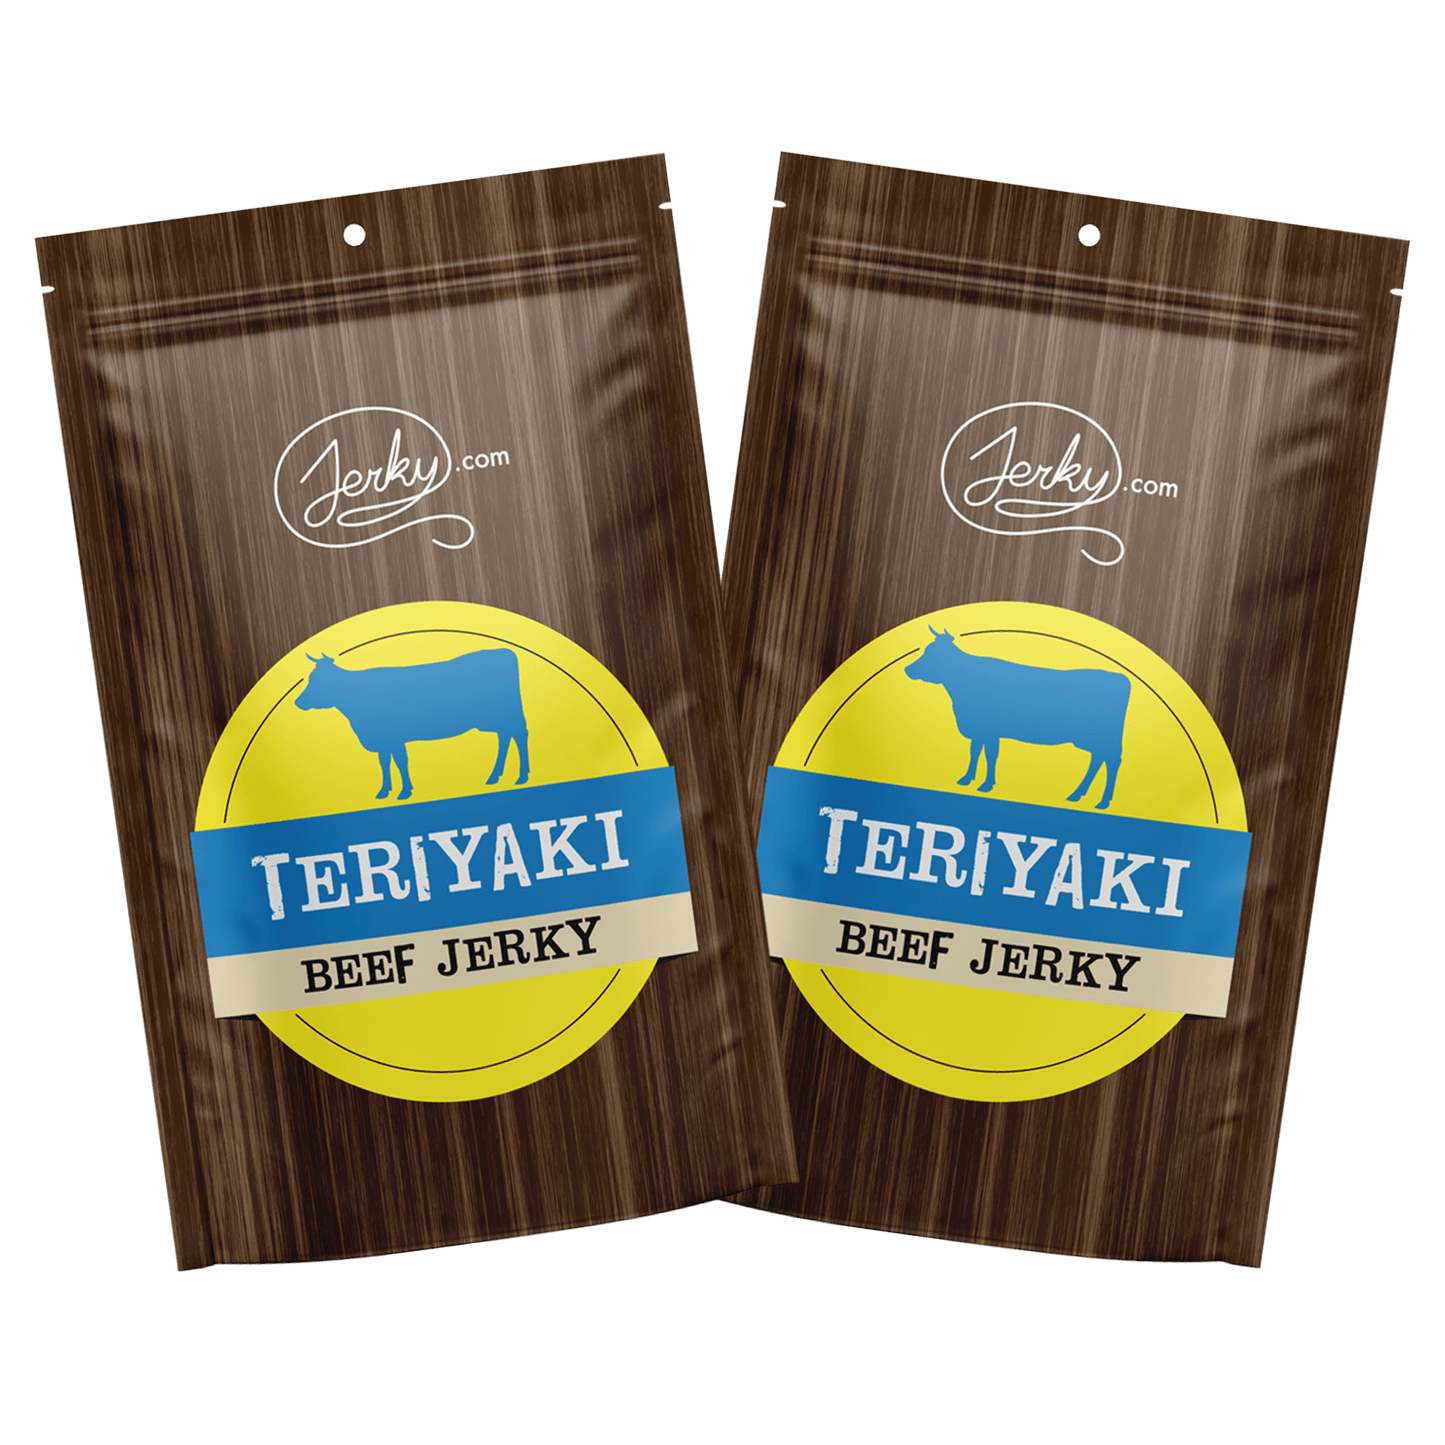 All-Natural Beef Jerky - Teriyaki - 1 Pound Bag by Jerky.com